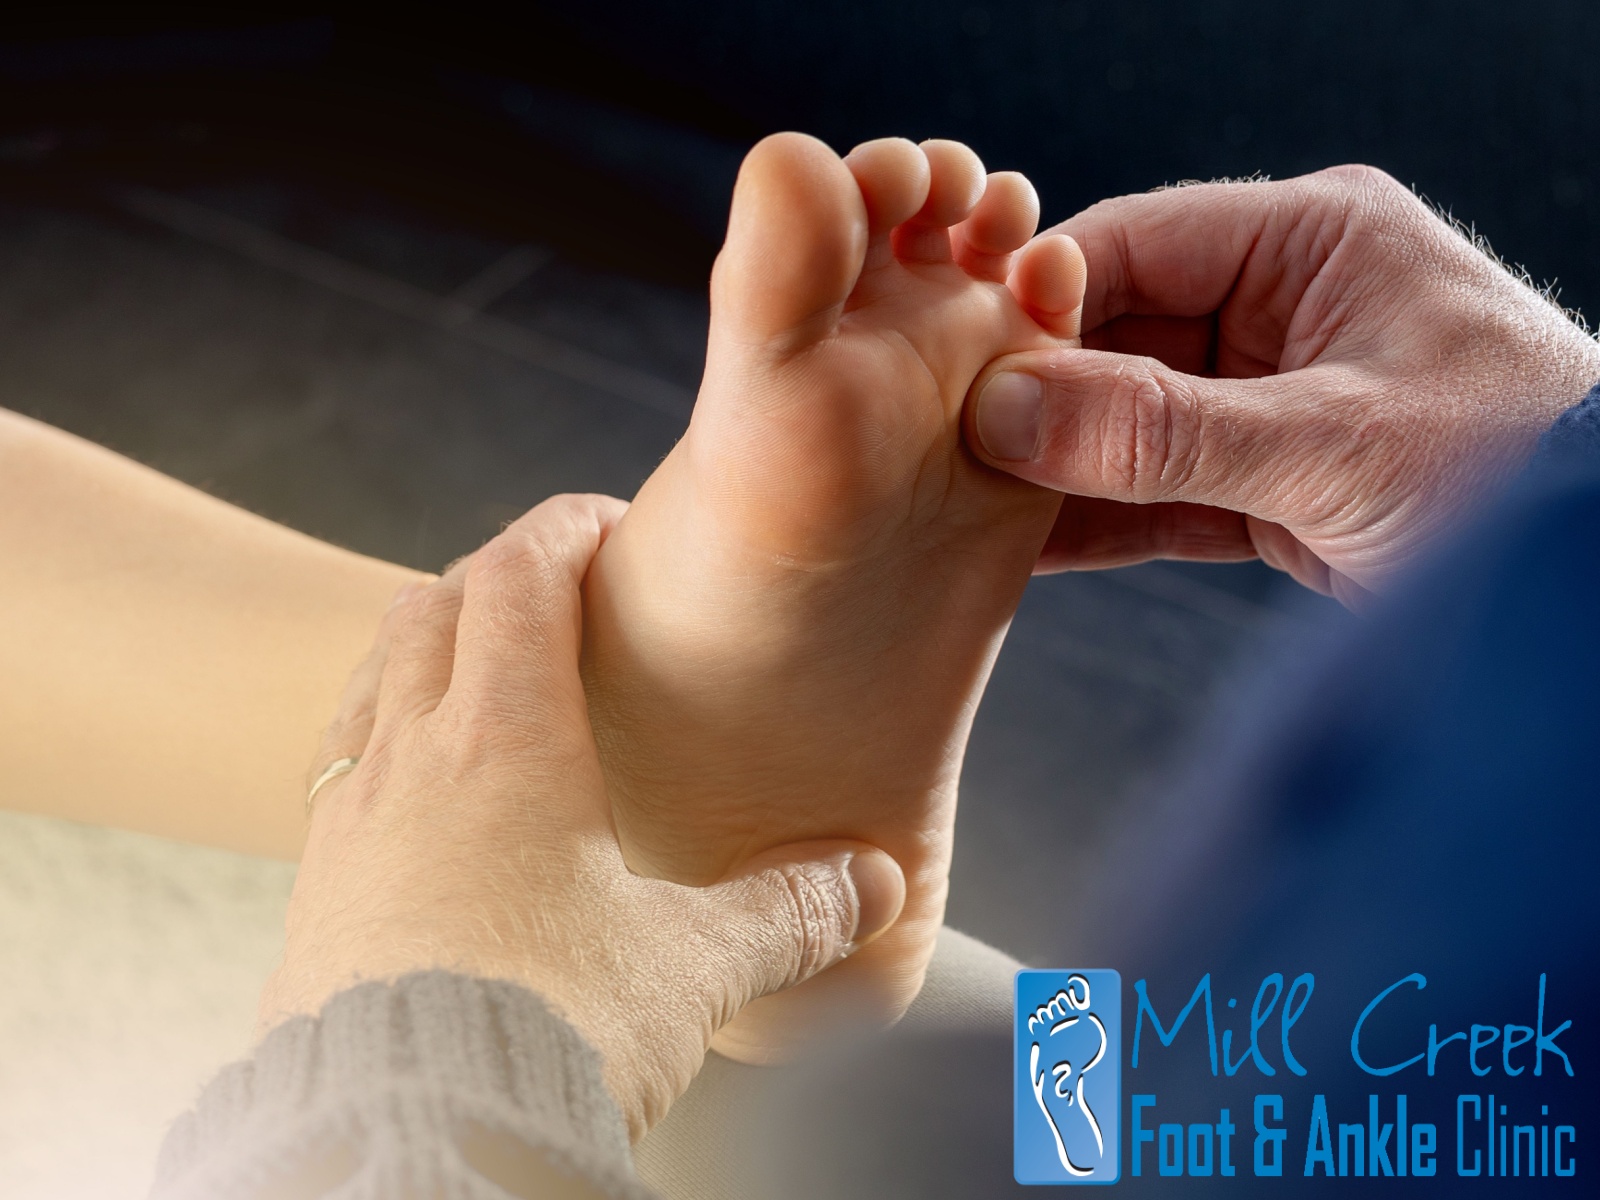 Find Your Foot Relief: Podiatrist Services Near Kirkland